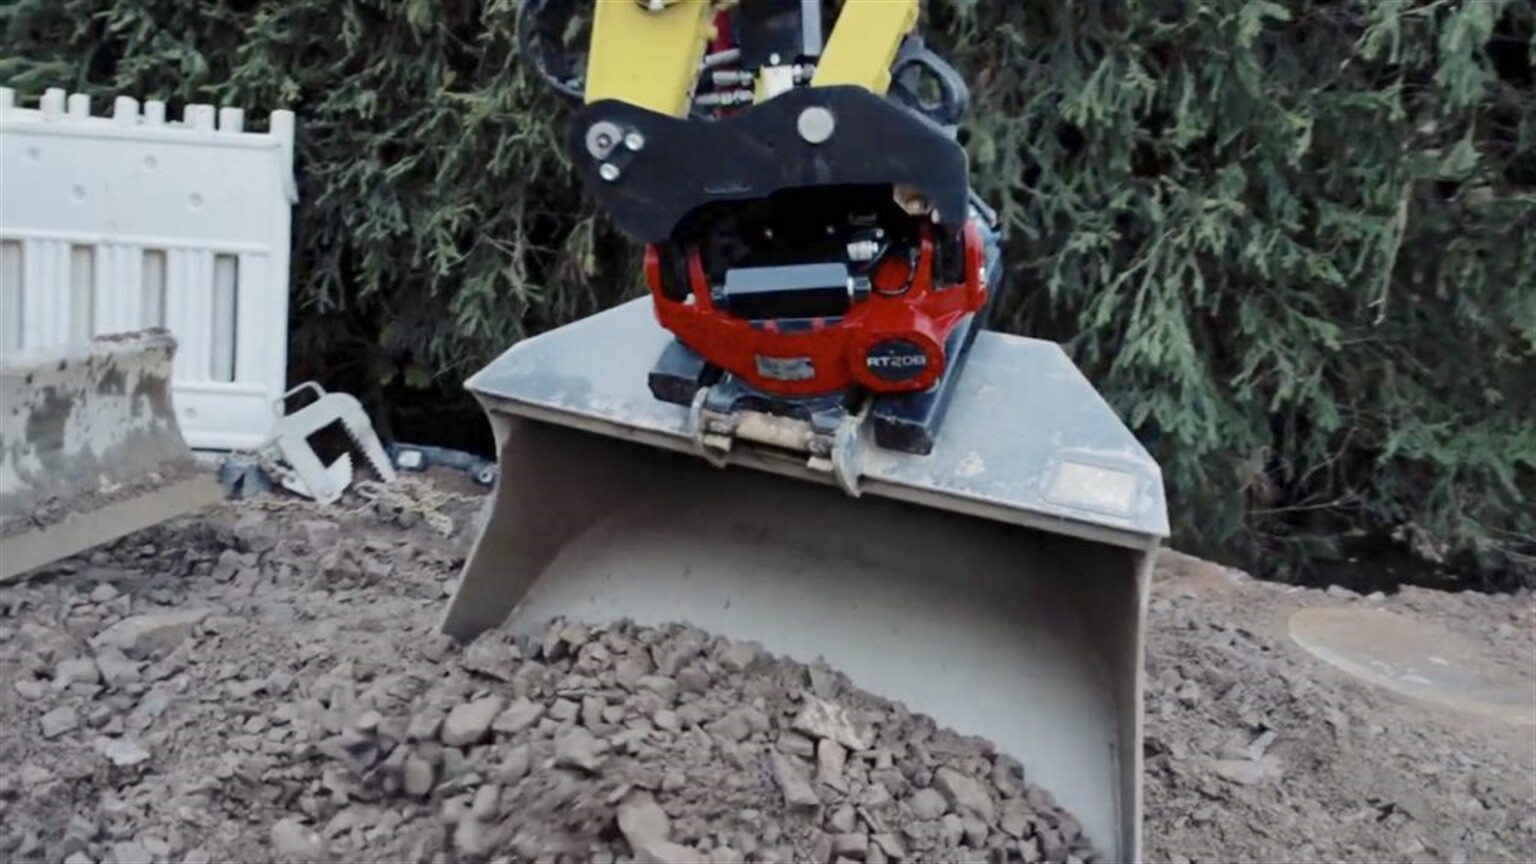 Antipodean excavator operator gets the tilty bug